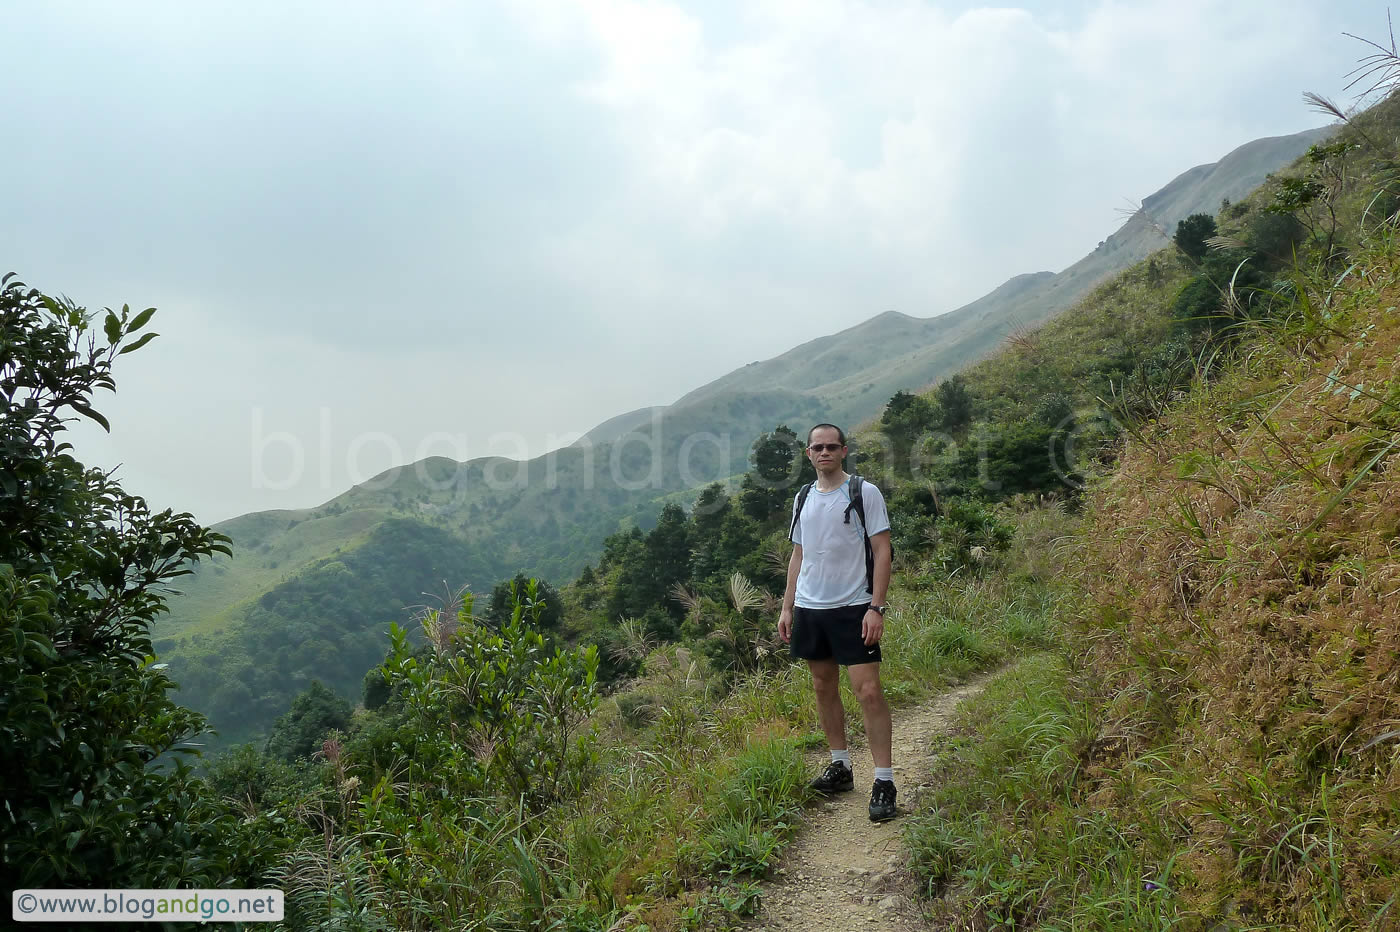 Lantau Trail - Much more to go